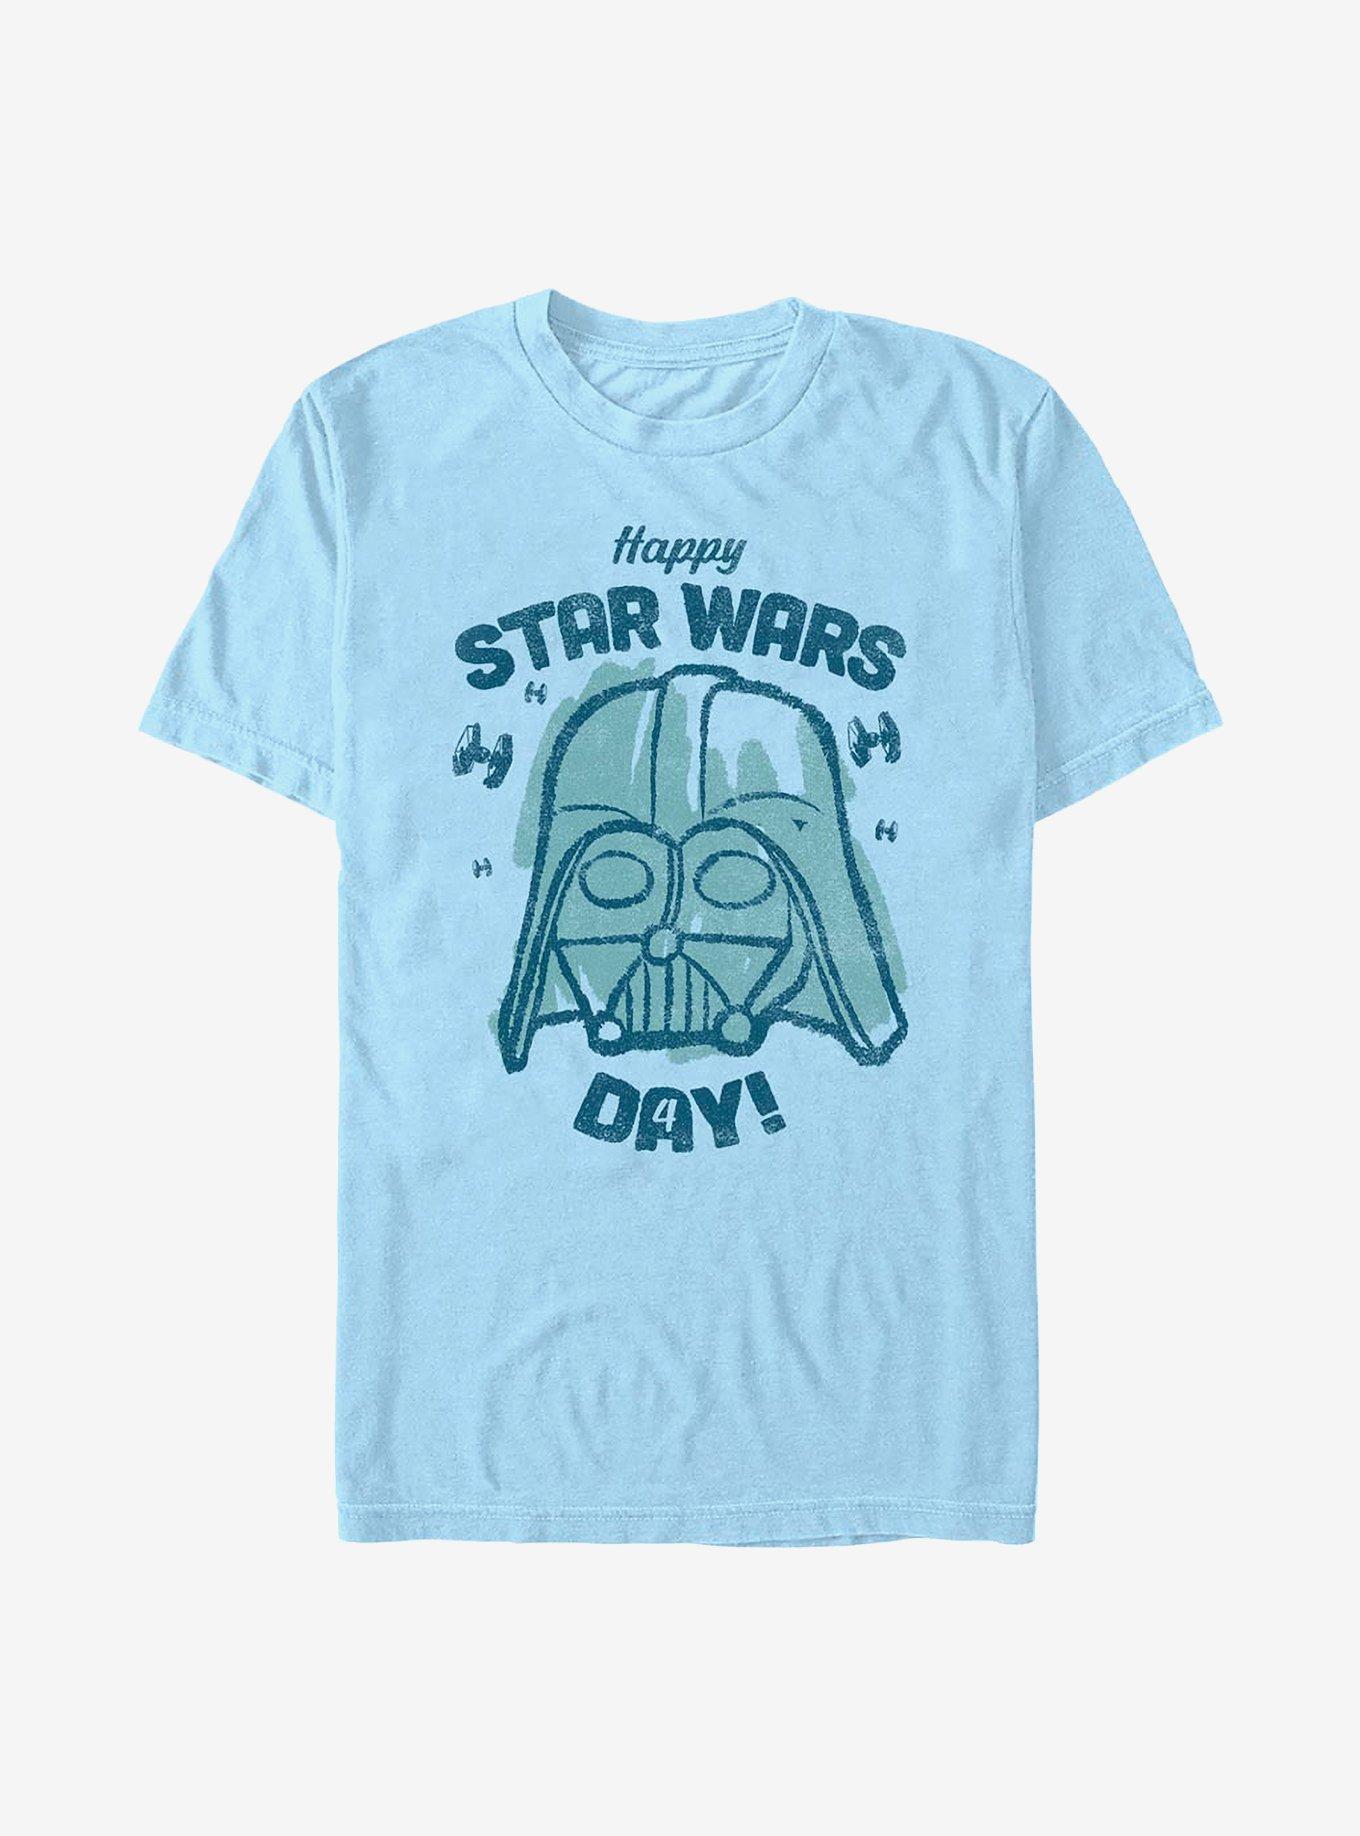 Star Wars Happy Day T-Shirt